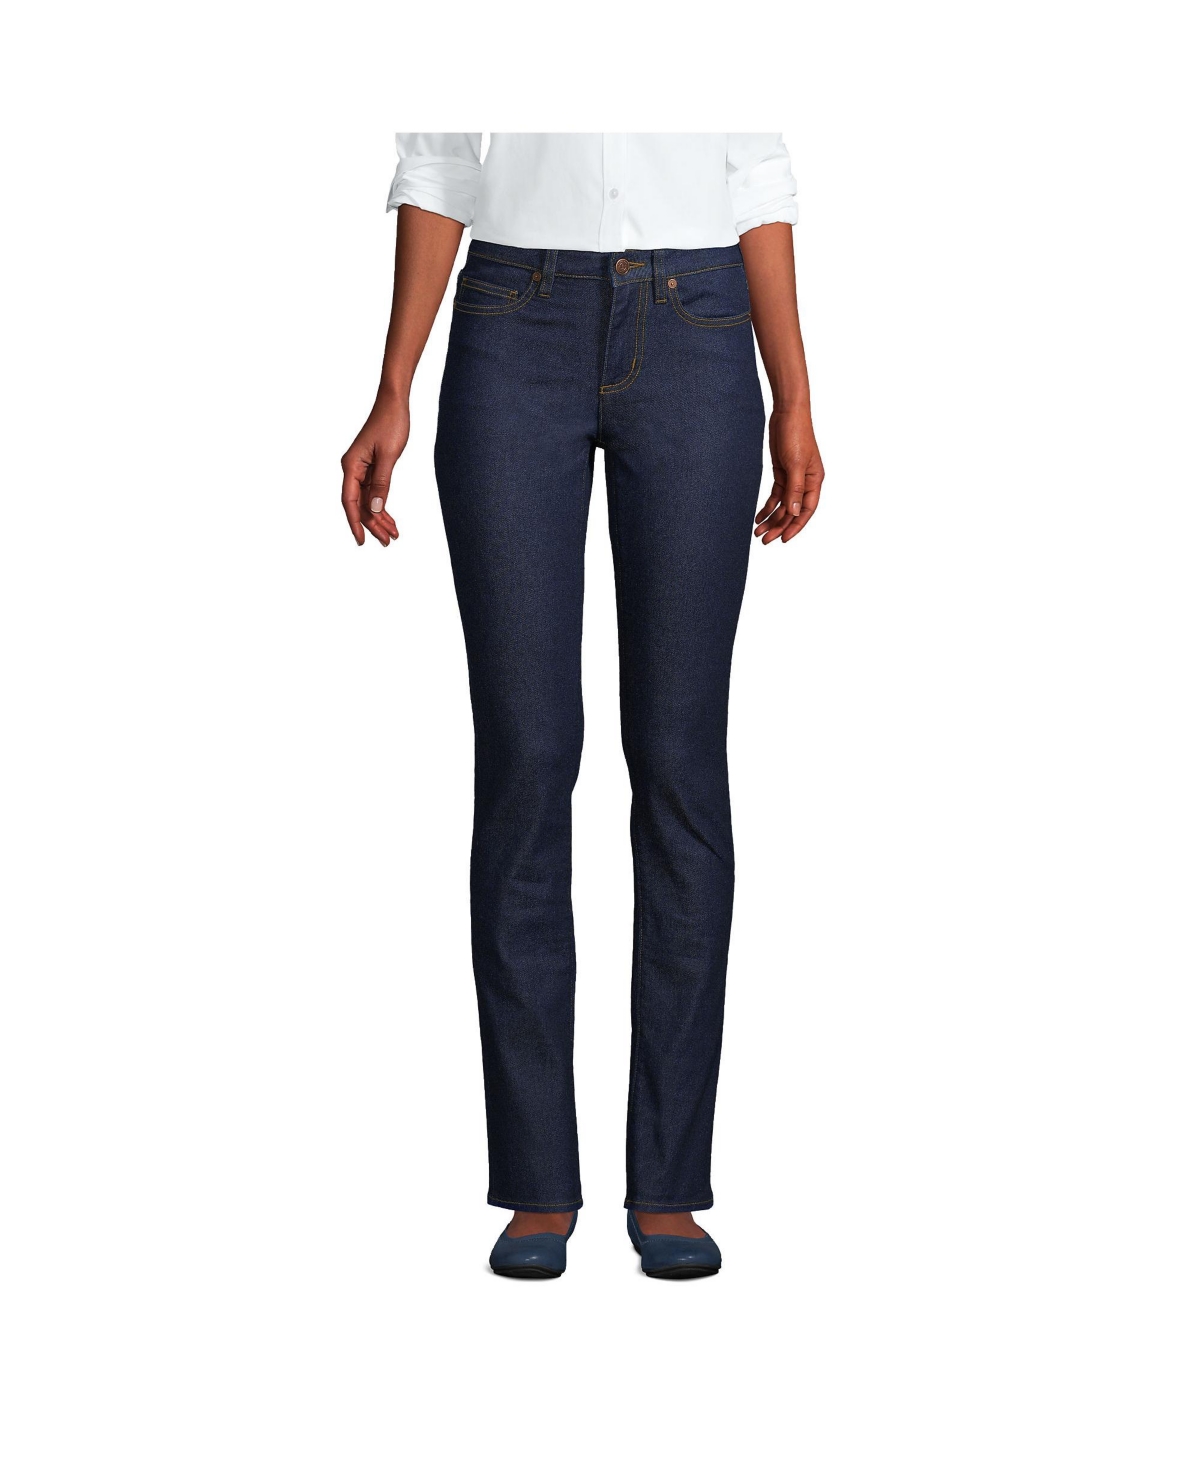 Women's Recover Mid Rise Straight Leg Blue Jeans - Port indigo